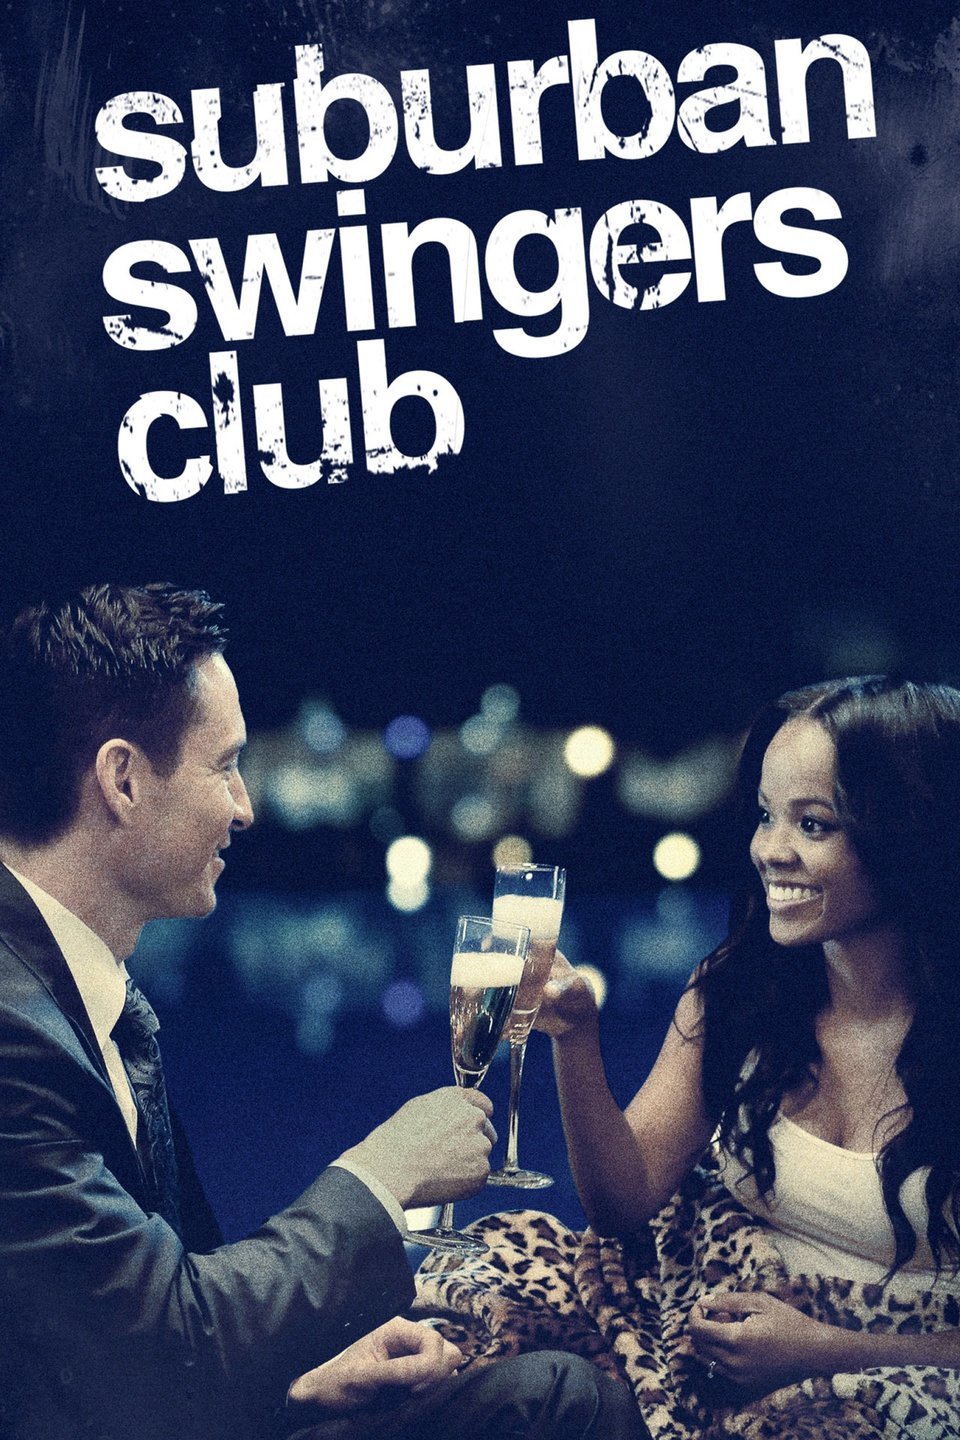 Suburban Swingers Club picture